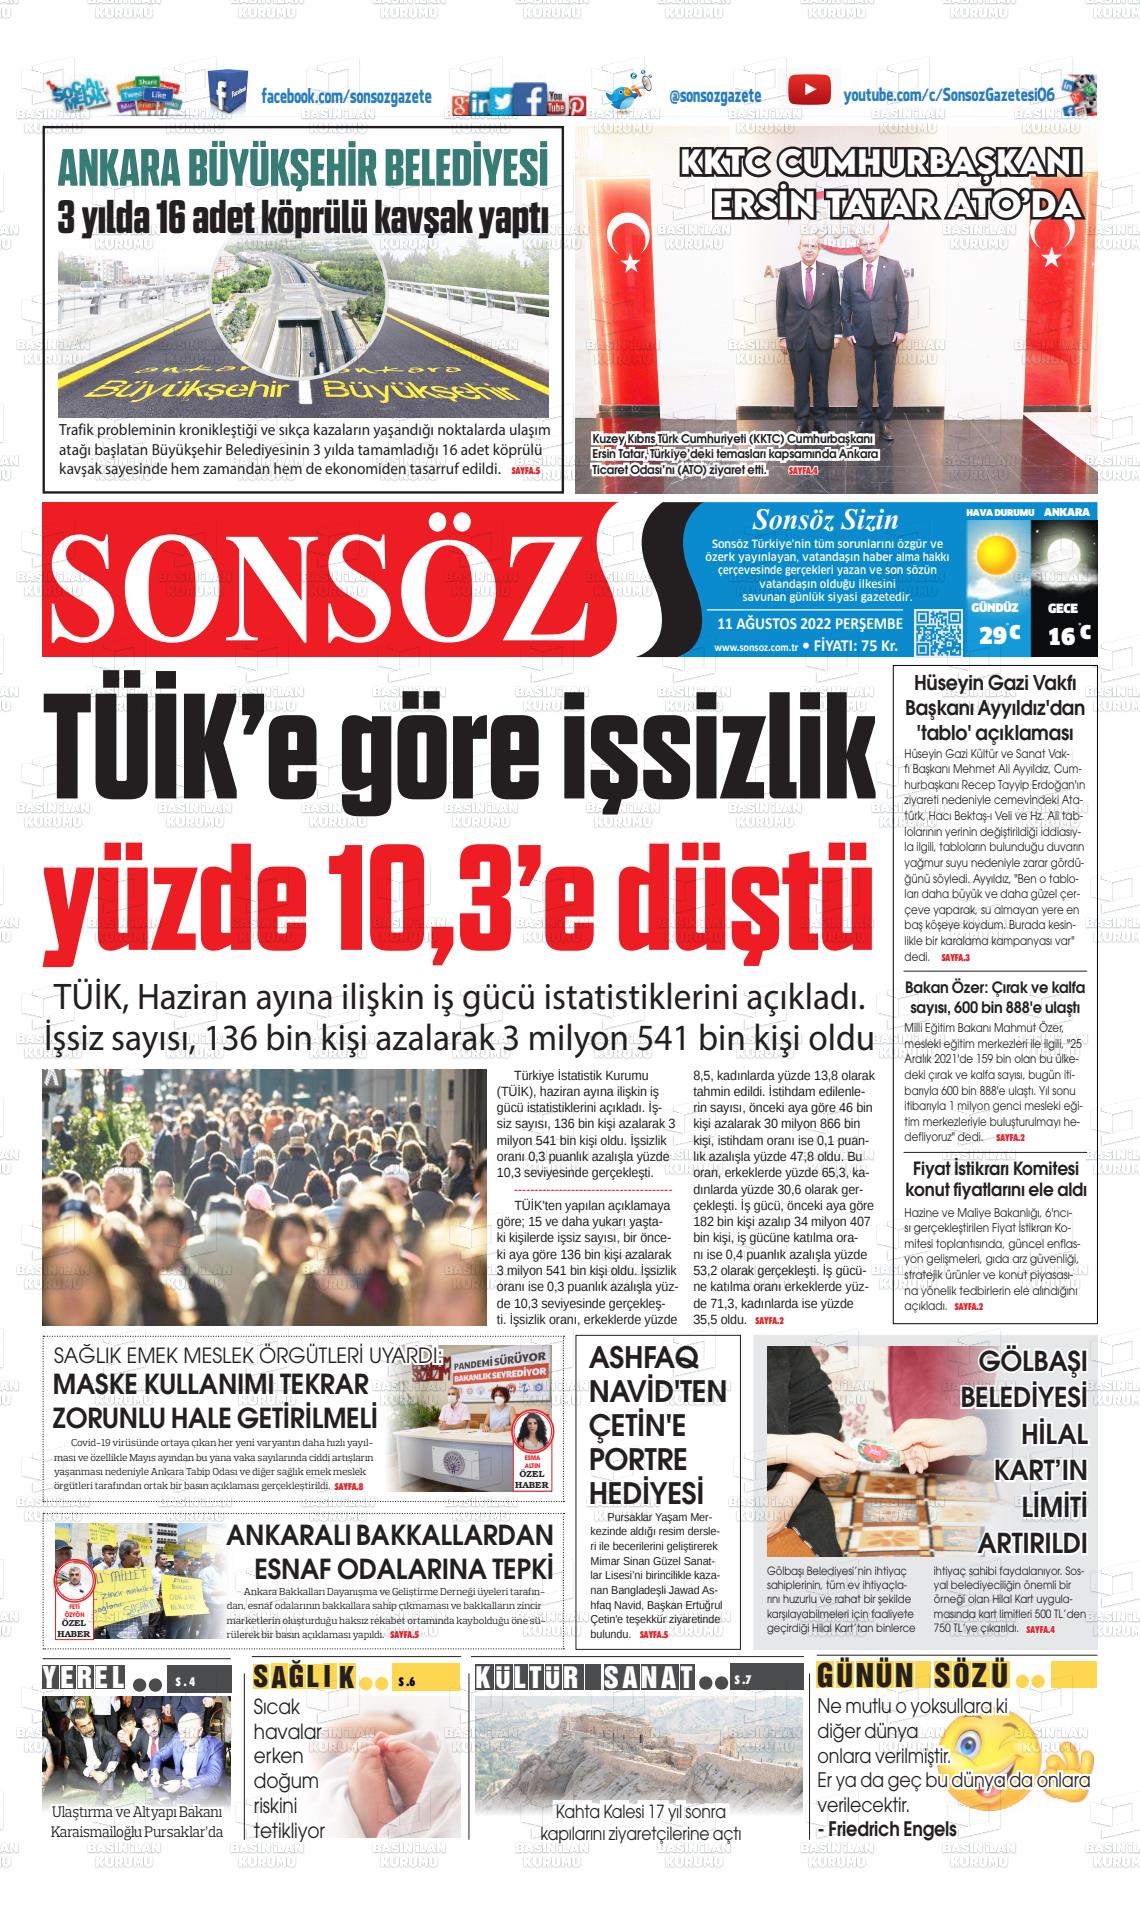 11 Ağustos 2022 Ankara Sonsöz Gazete Manşeti